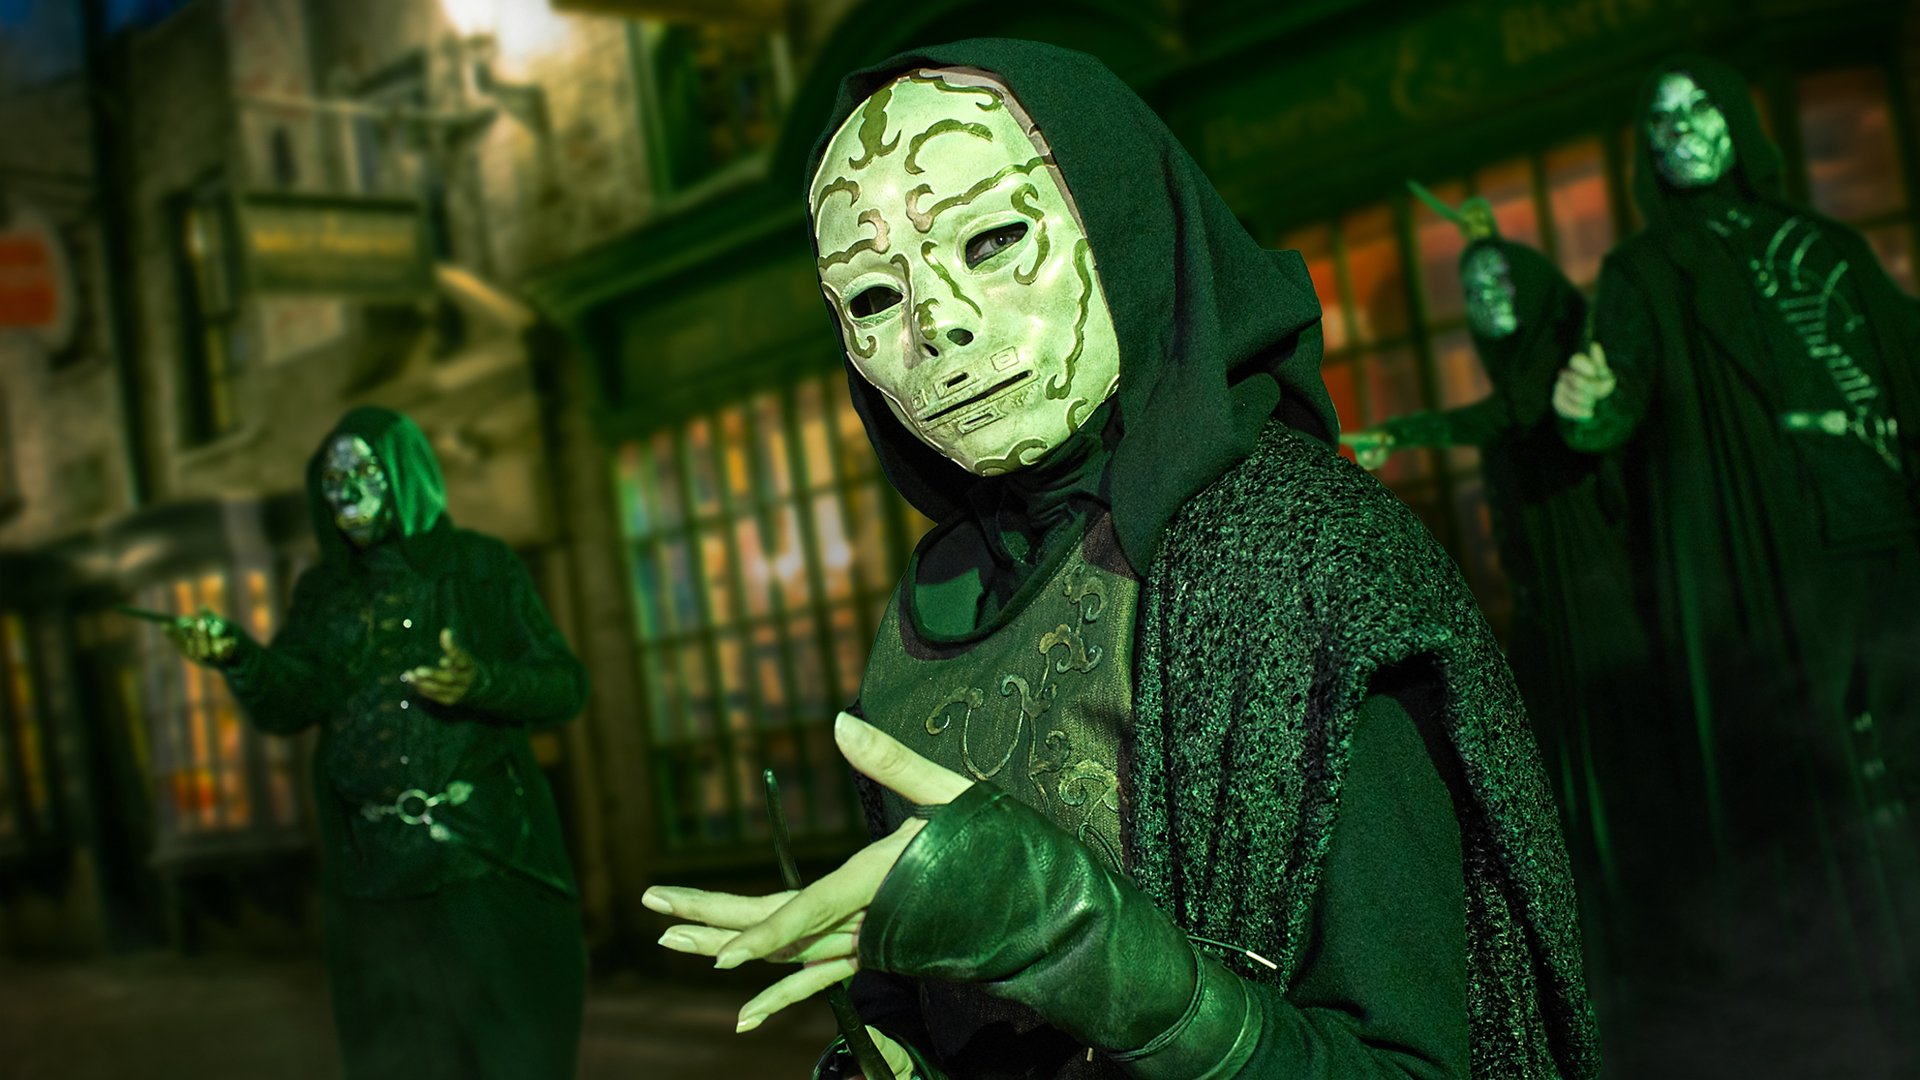   Death Eaters Descend on Universal Studios Orlando   Let’s go Orlando Potterheads!   Read More  